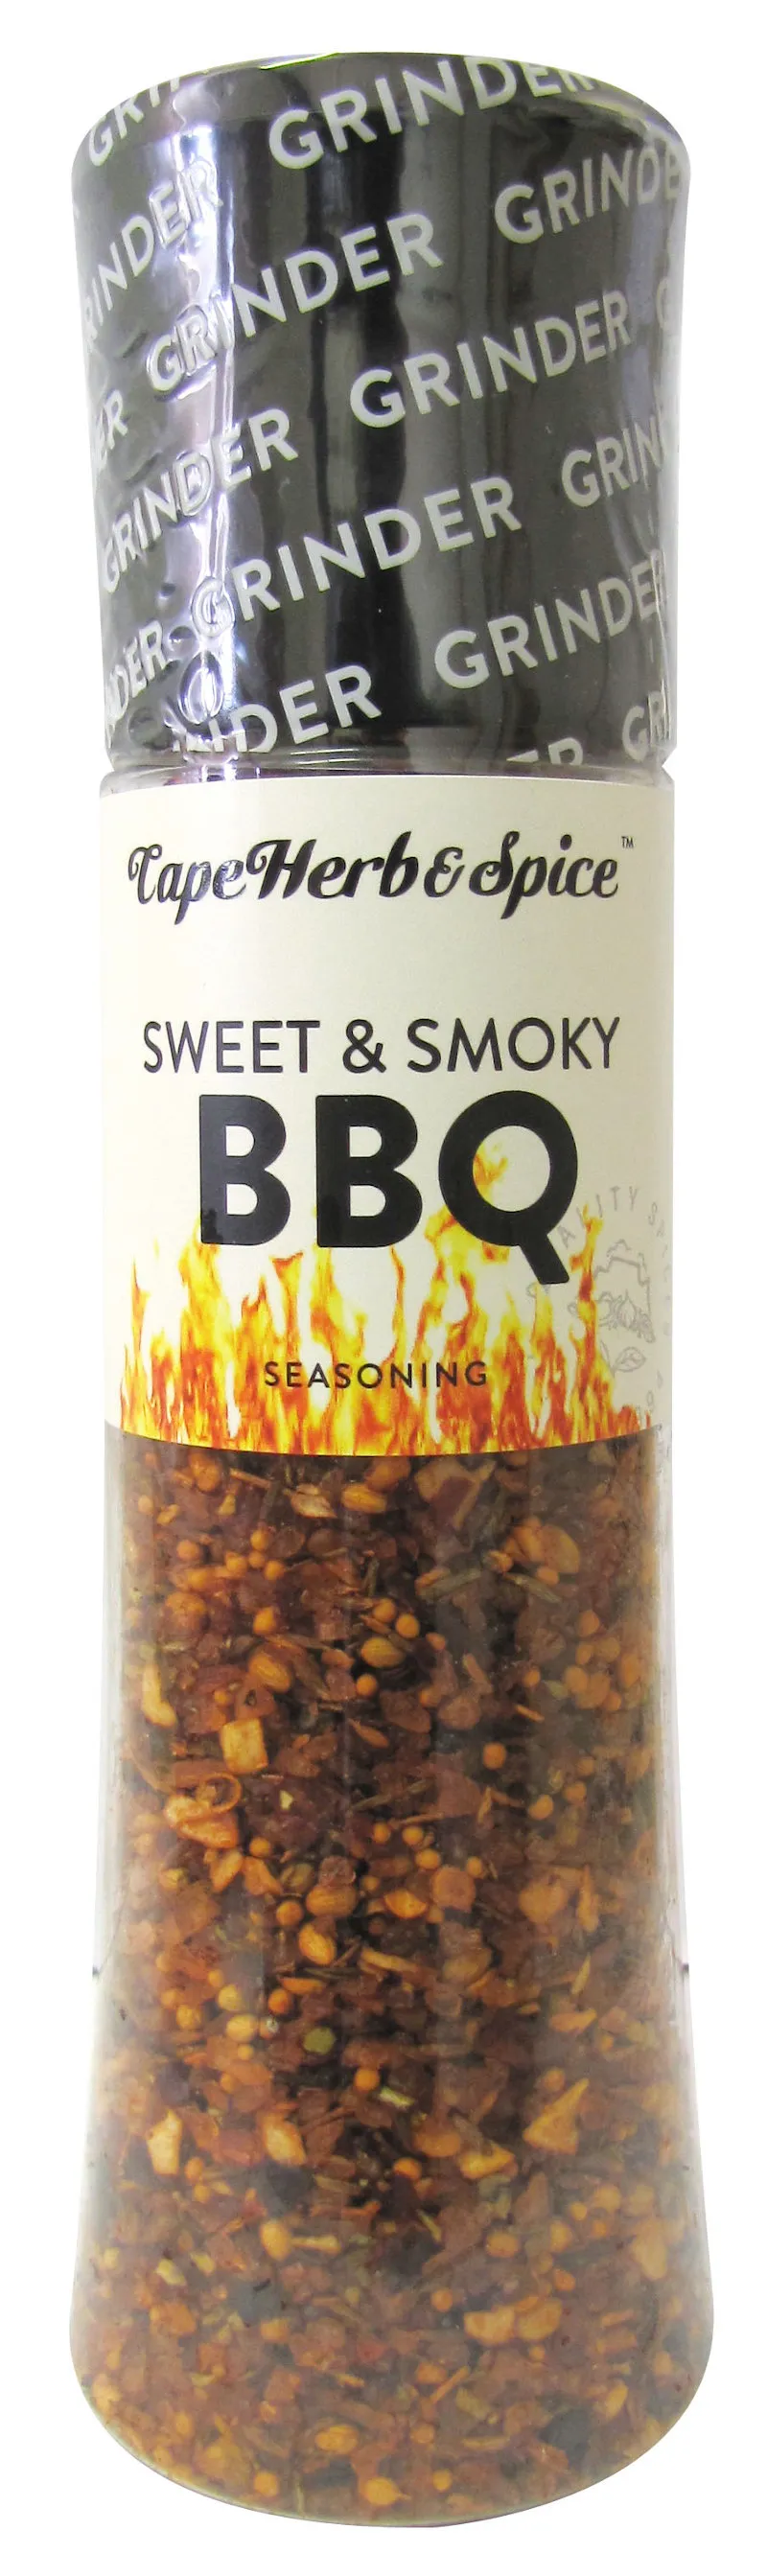 Приправа копчено-сладкая Cape Herb & Spice Sweet & Smoky BBQ